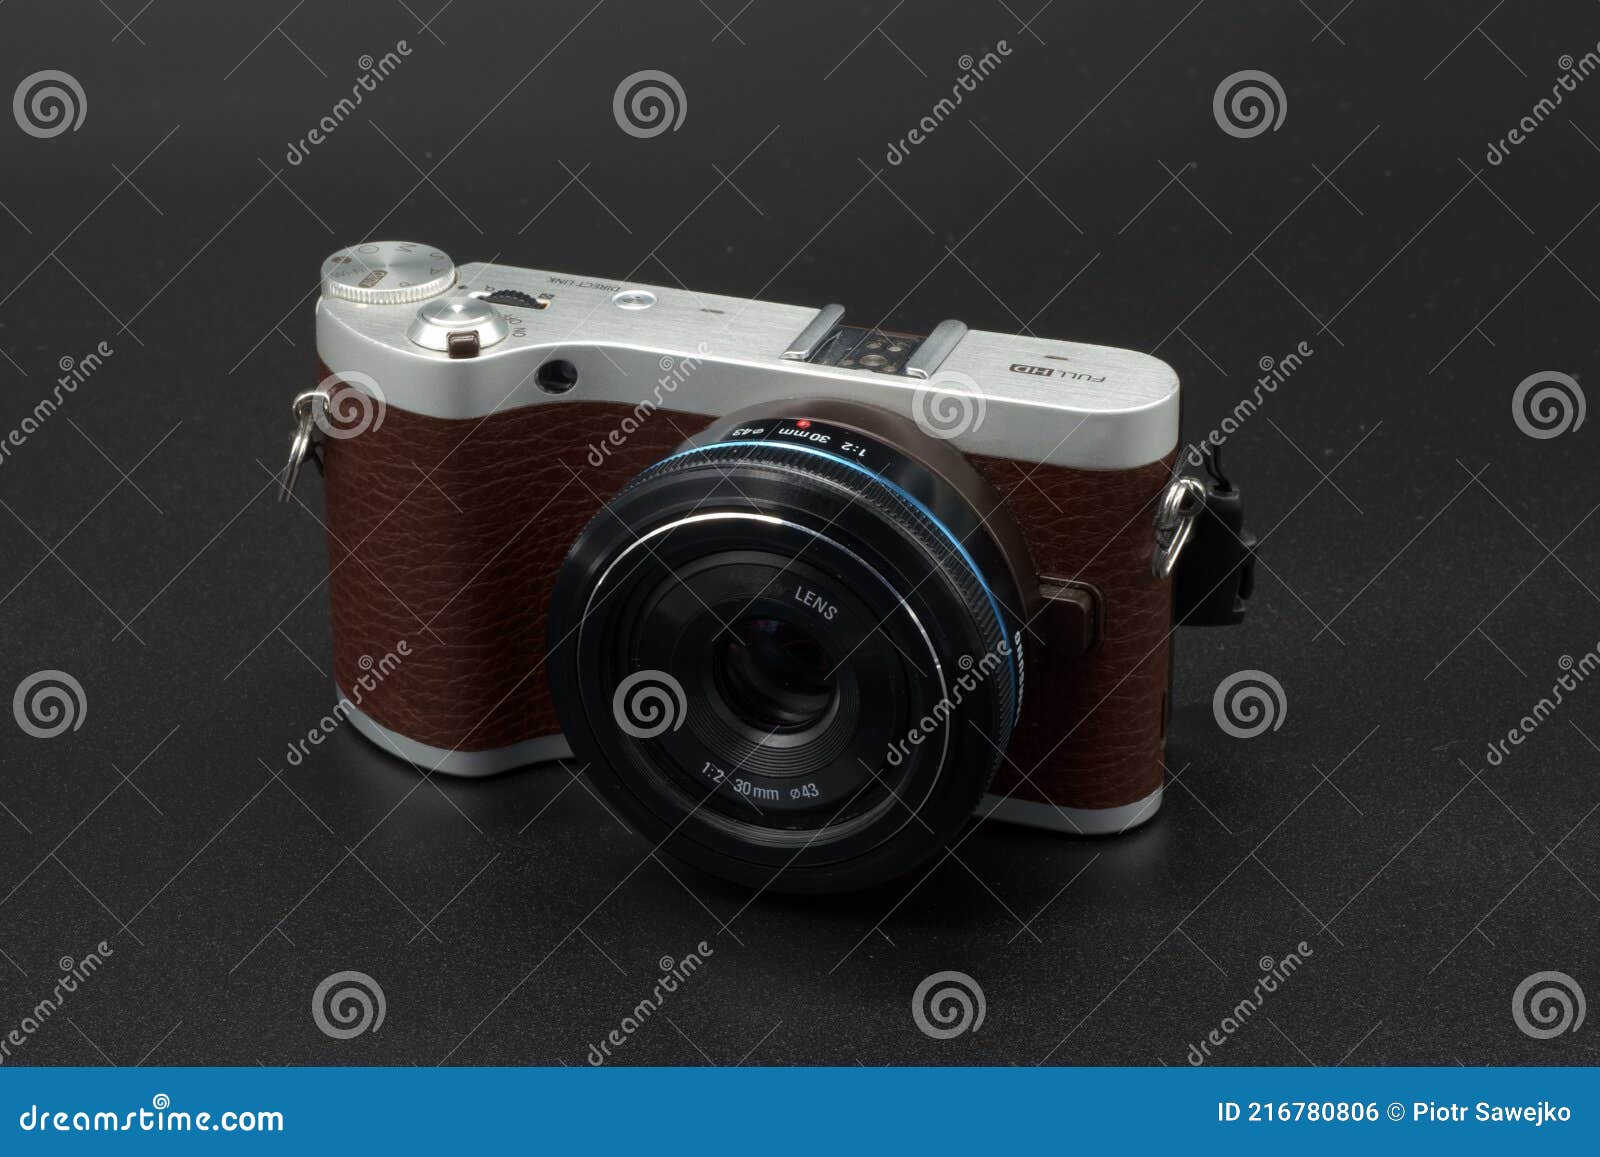 photo camera plastic black lens